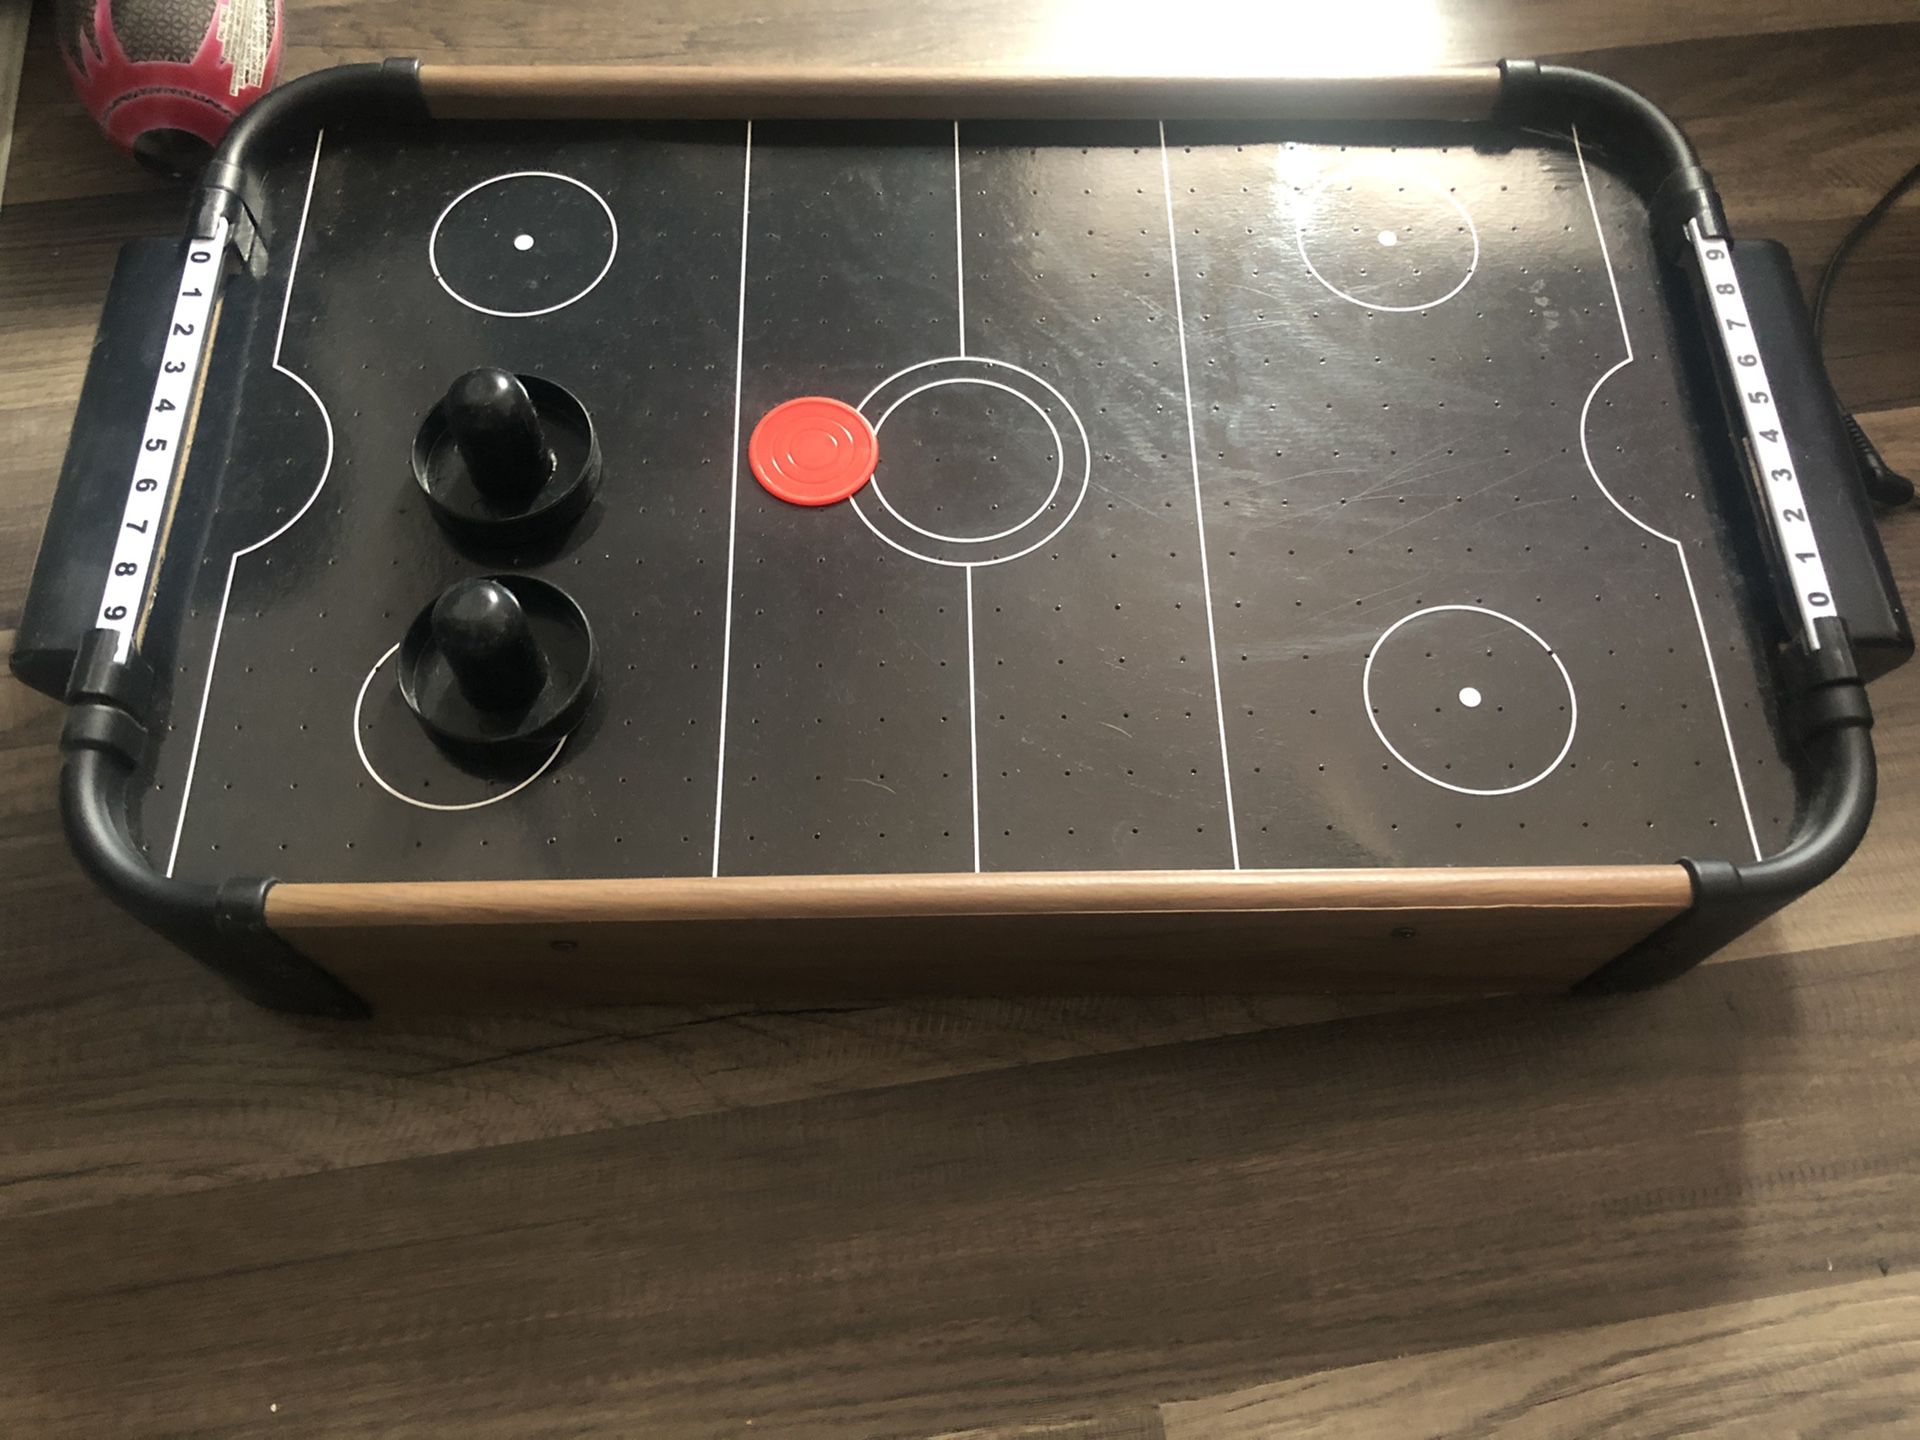 Mini air hockey table